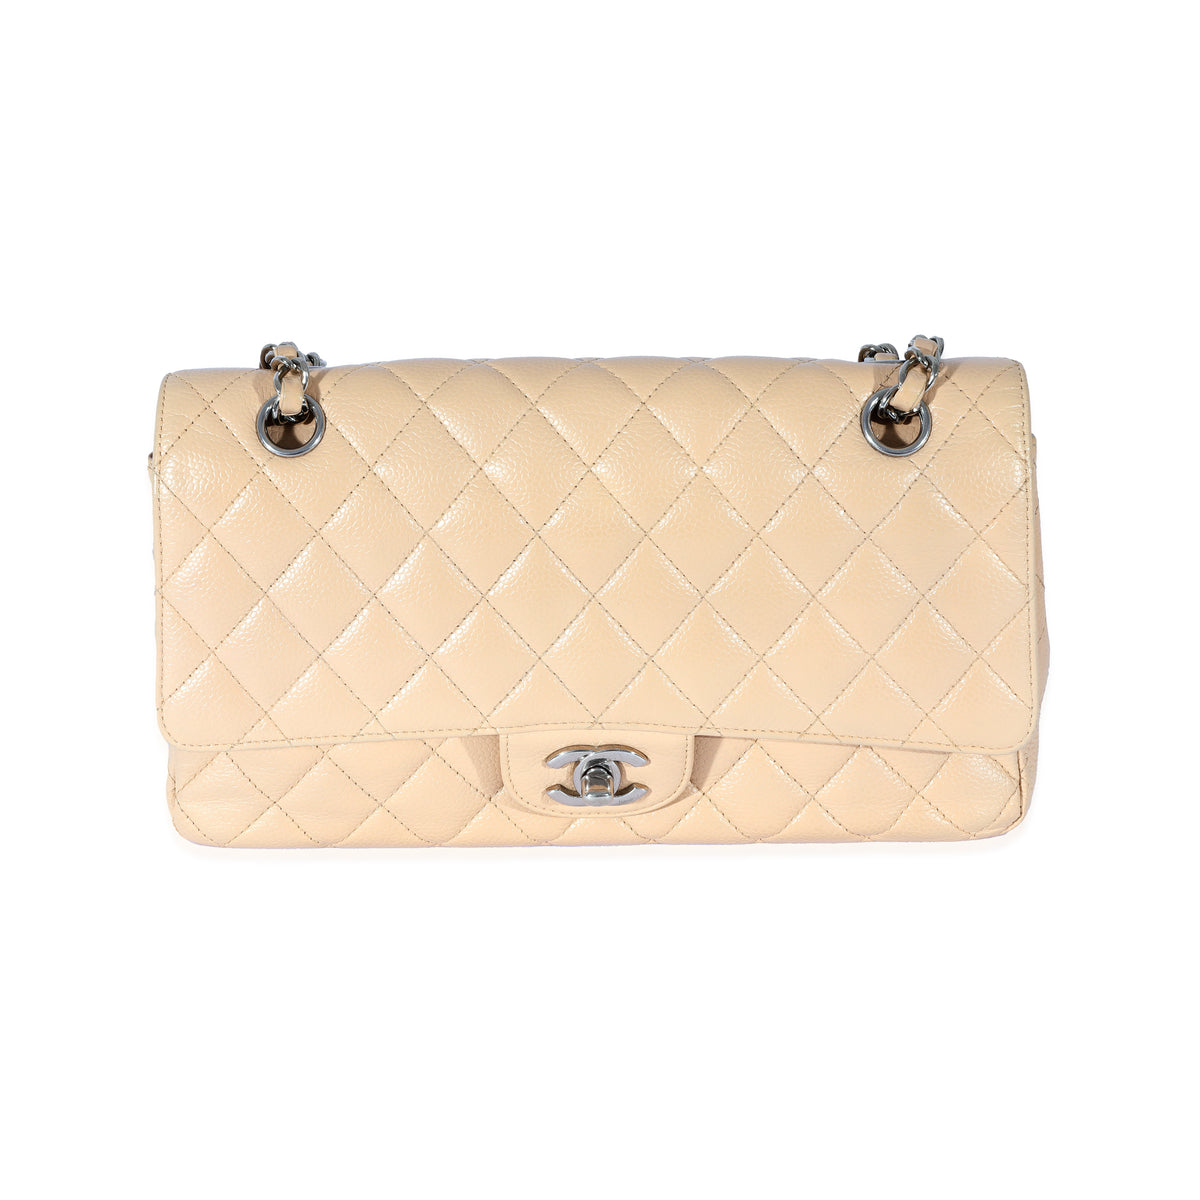 Chanel Beige Quilted Caviar Medium Classic Flap Bag